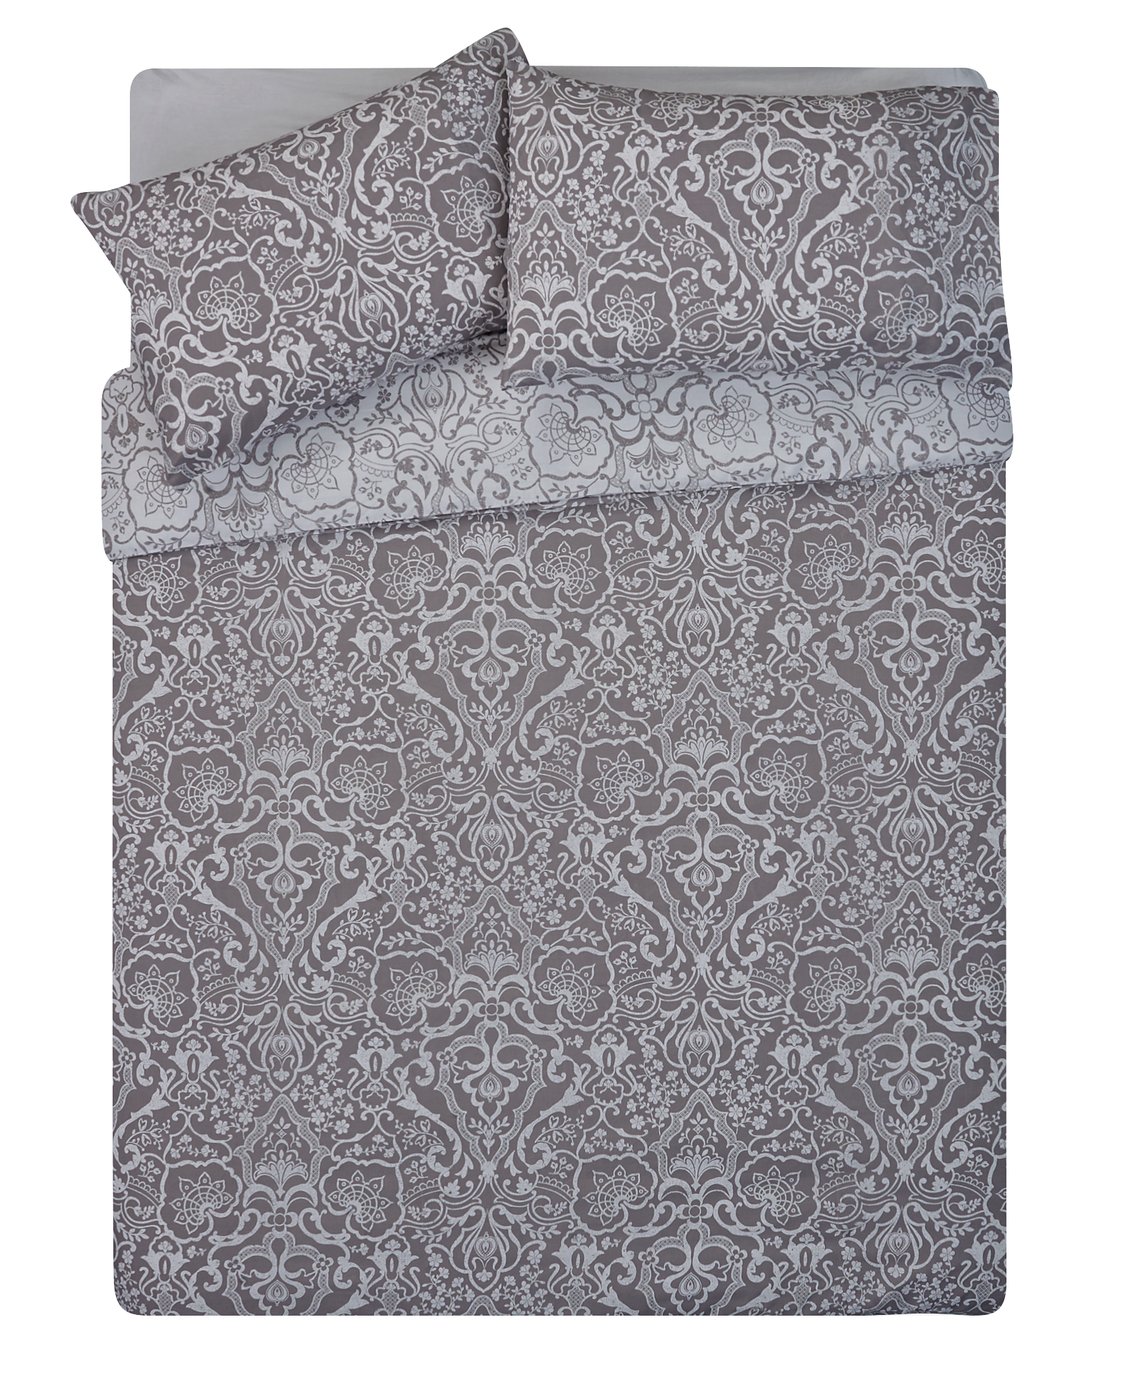 Argos Home Grey Lace Damask Bedding Set - Double